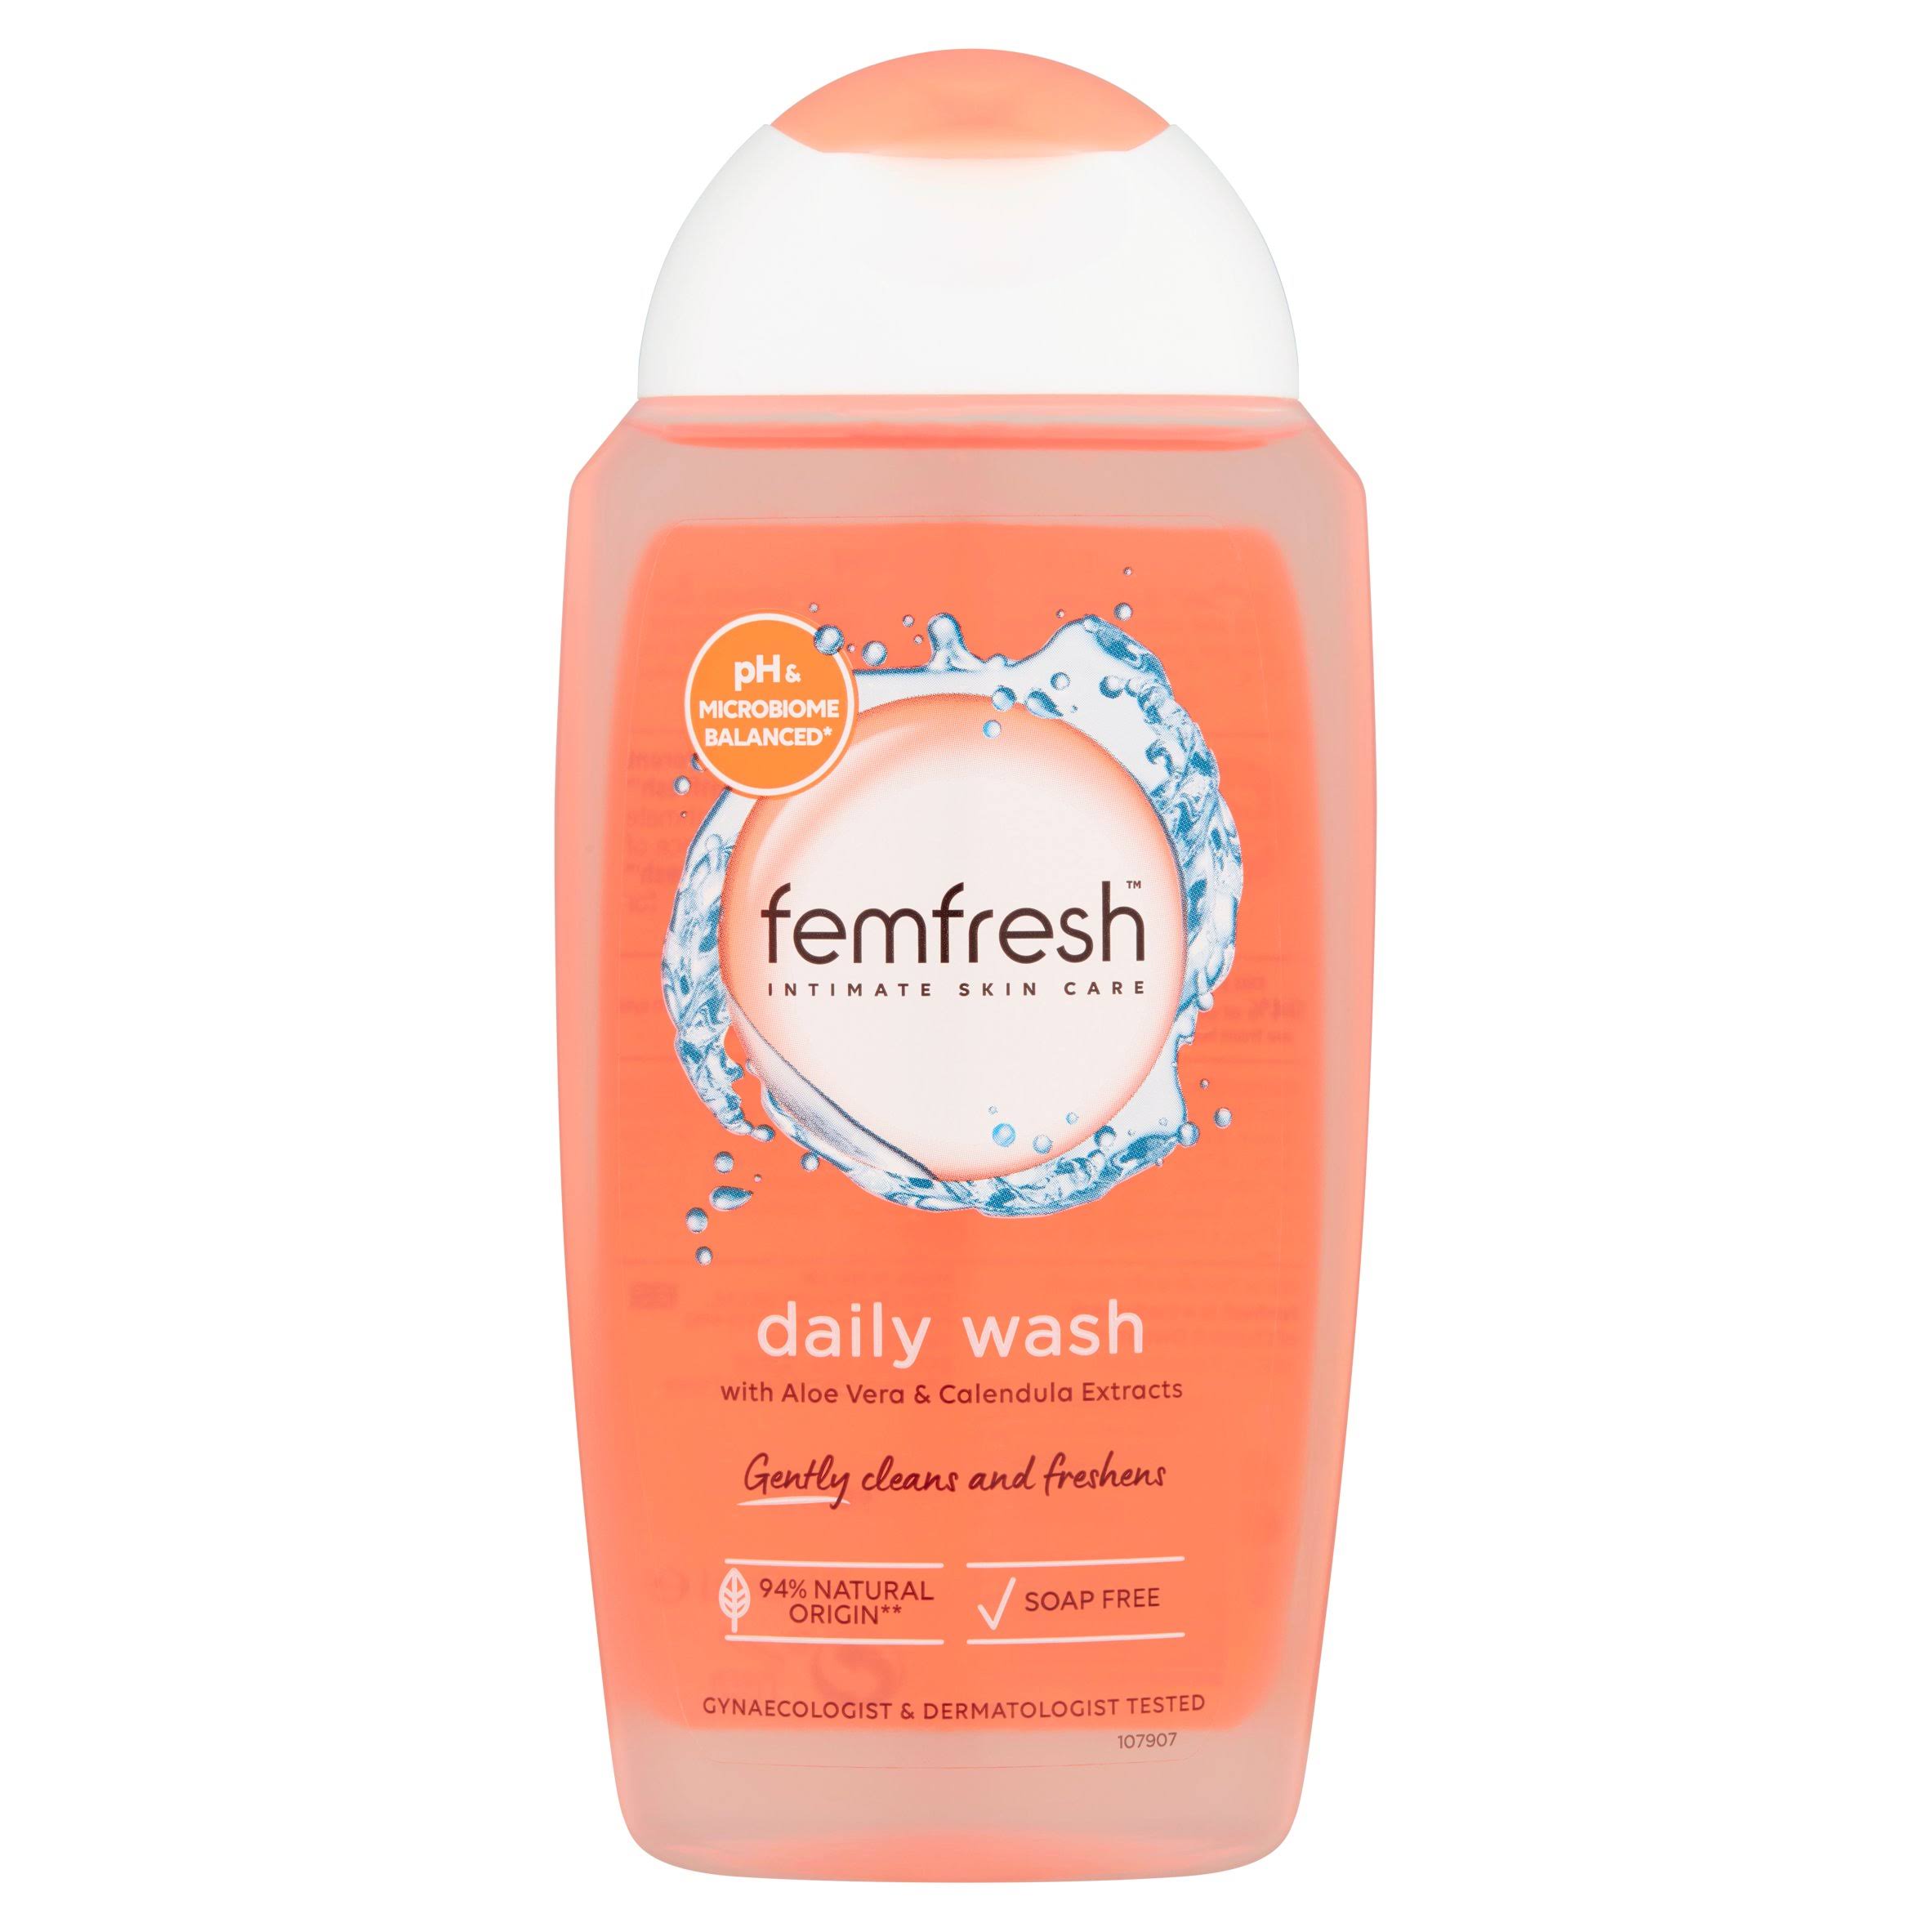 Femfresh Intimate Skin Care Daily Intimate Wash - with Aloe Vera, 250ml